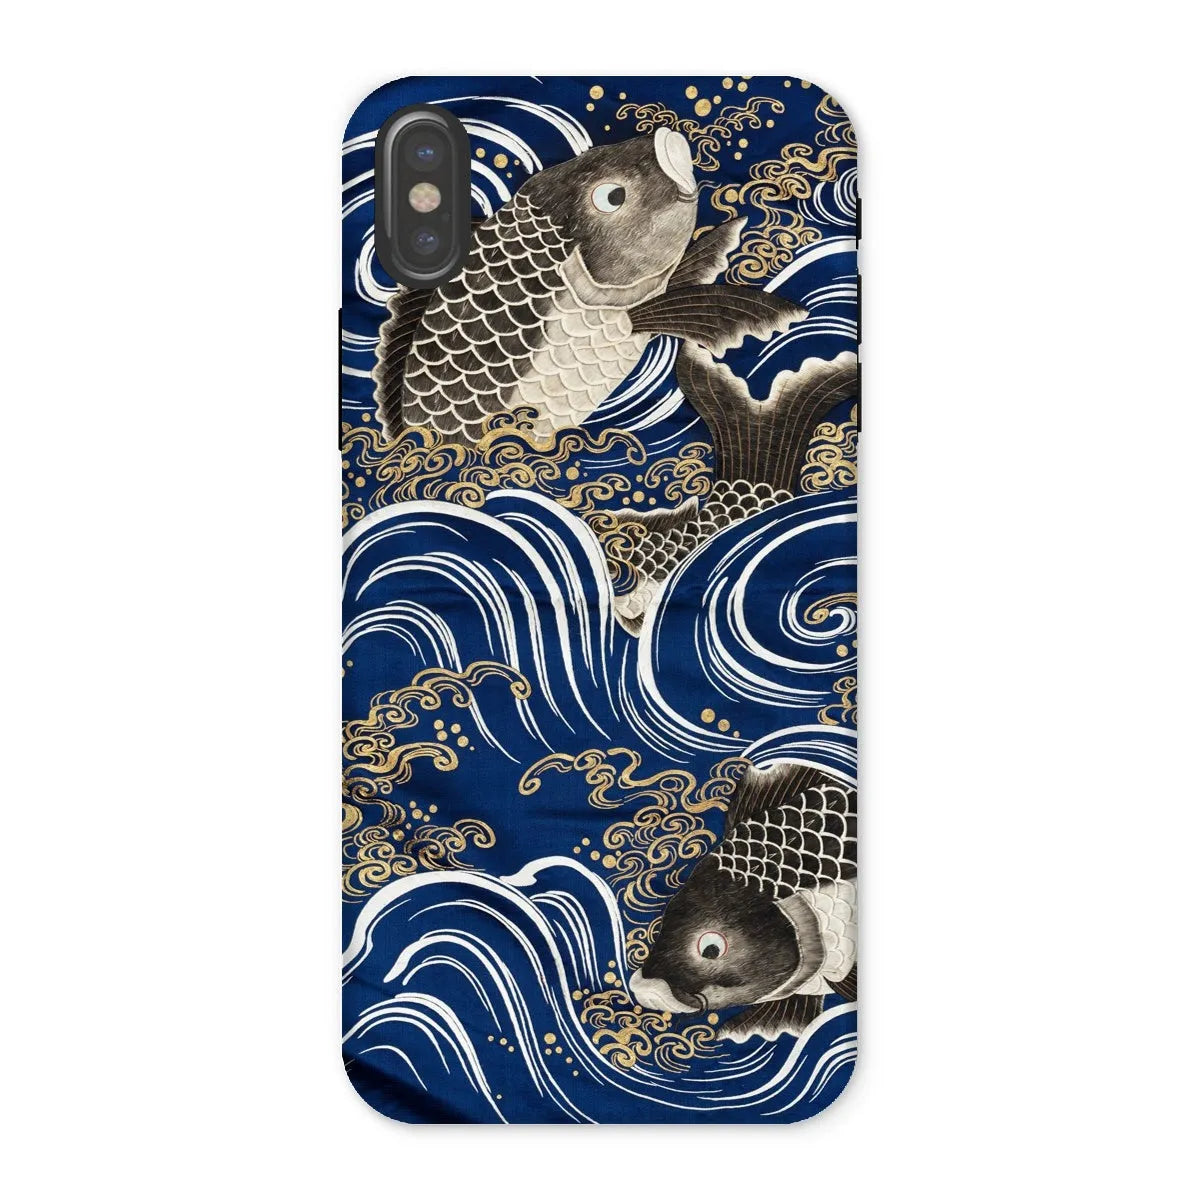 Fukusa And Carp - Japanese Meiji Period Art Phone Case - Iphone x / Matte - Mobile Phone Cases - Aesthetic Art